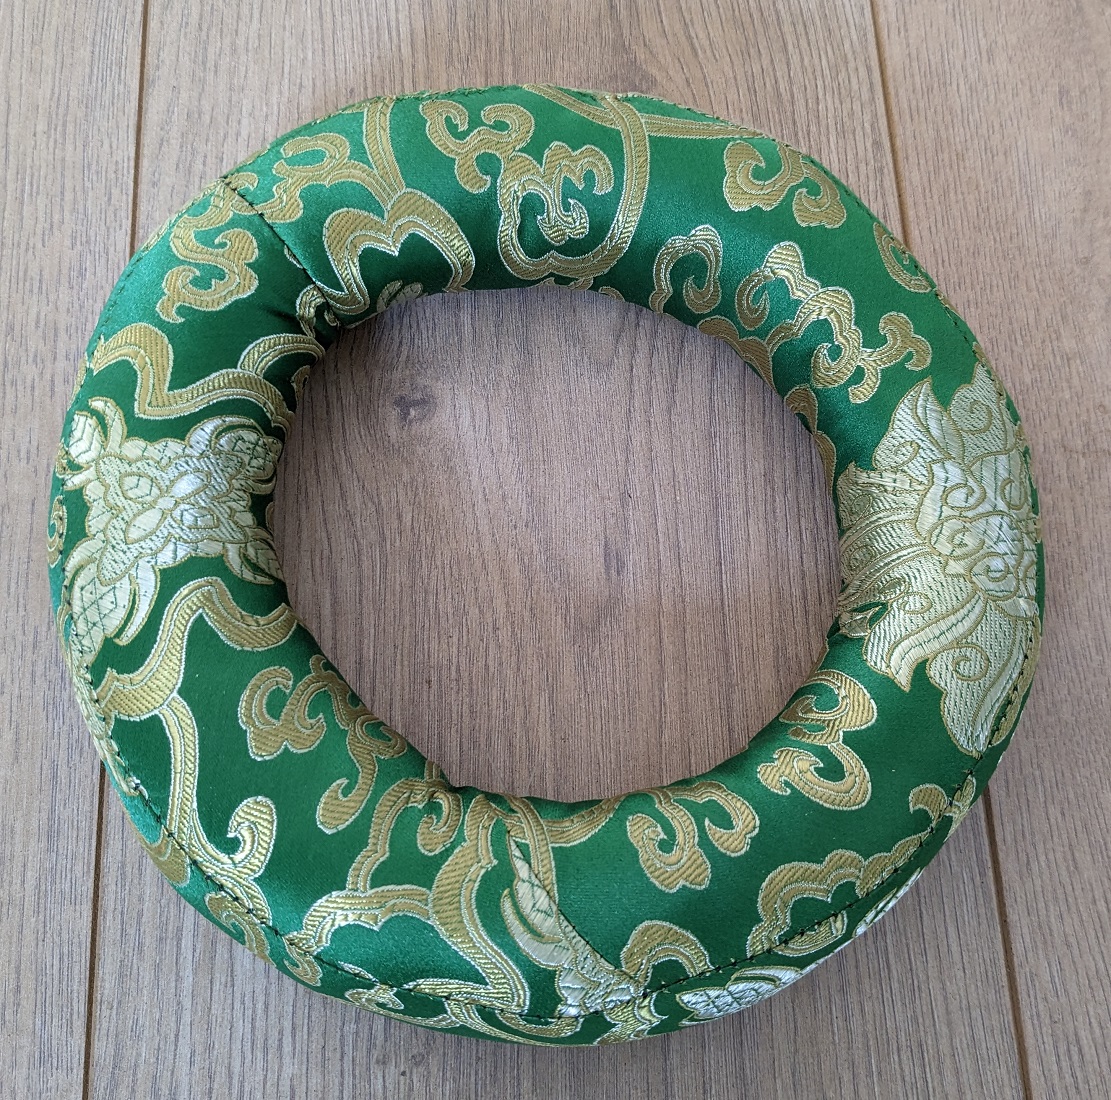 Tibetan Bowl Ring Cushion 20 cm Diameter Green